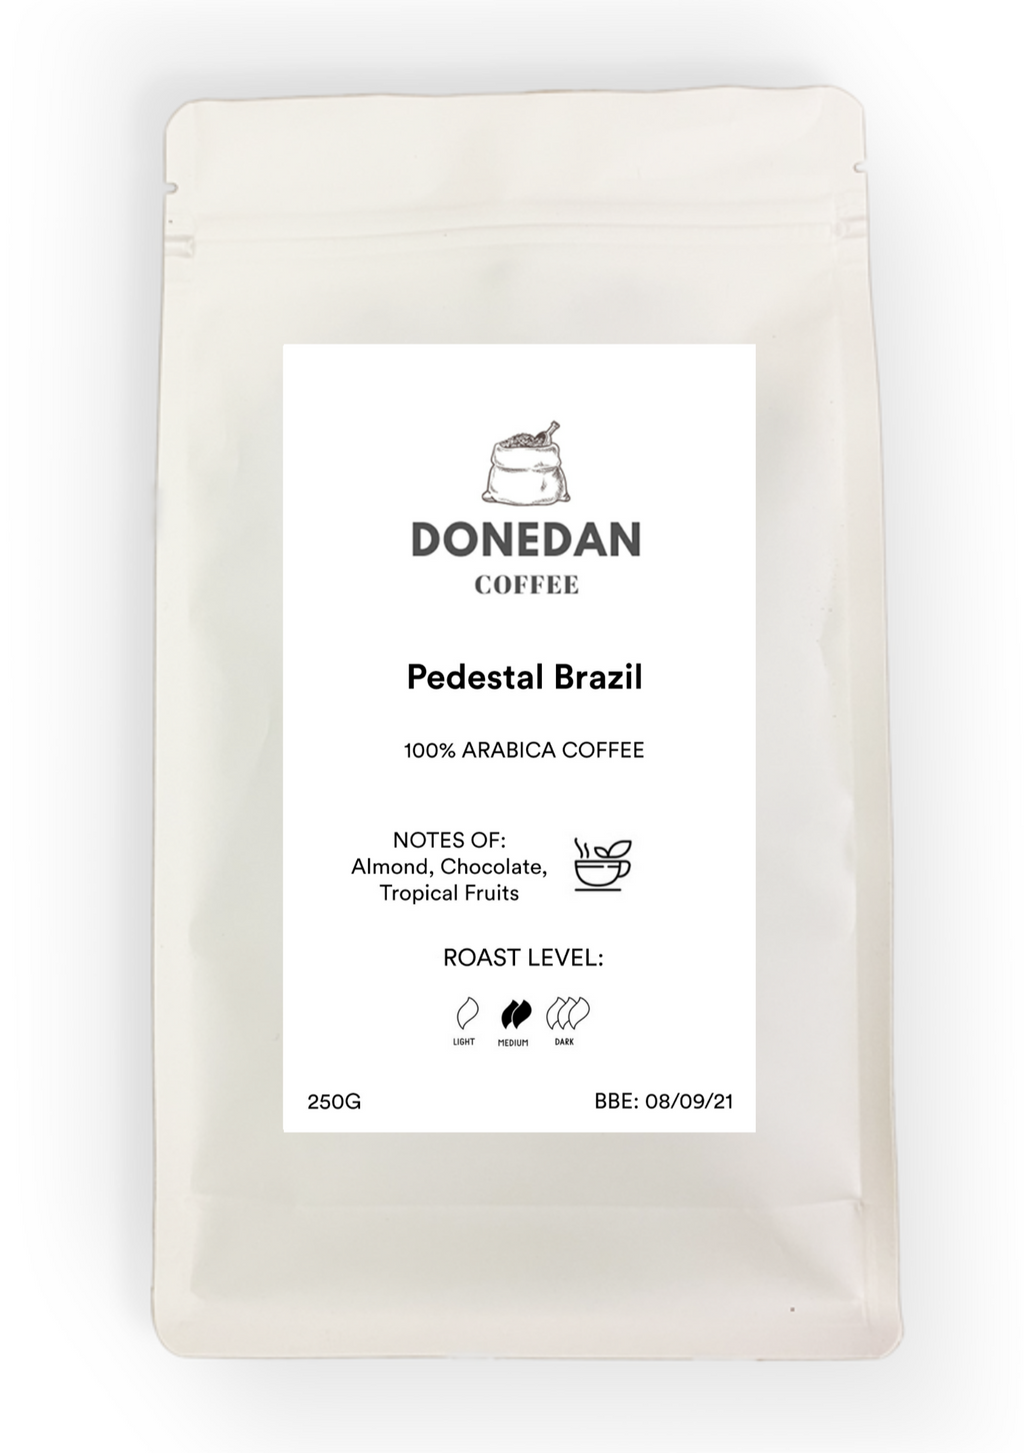 Pedestal Brazil coffee